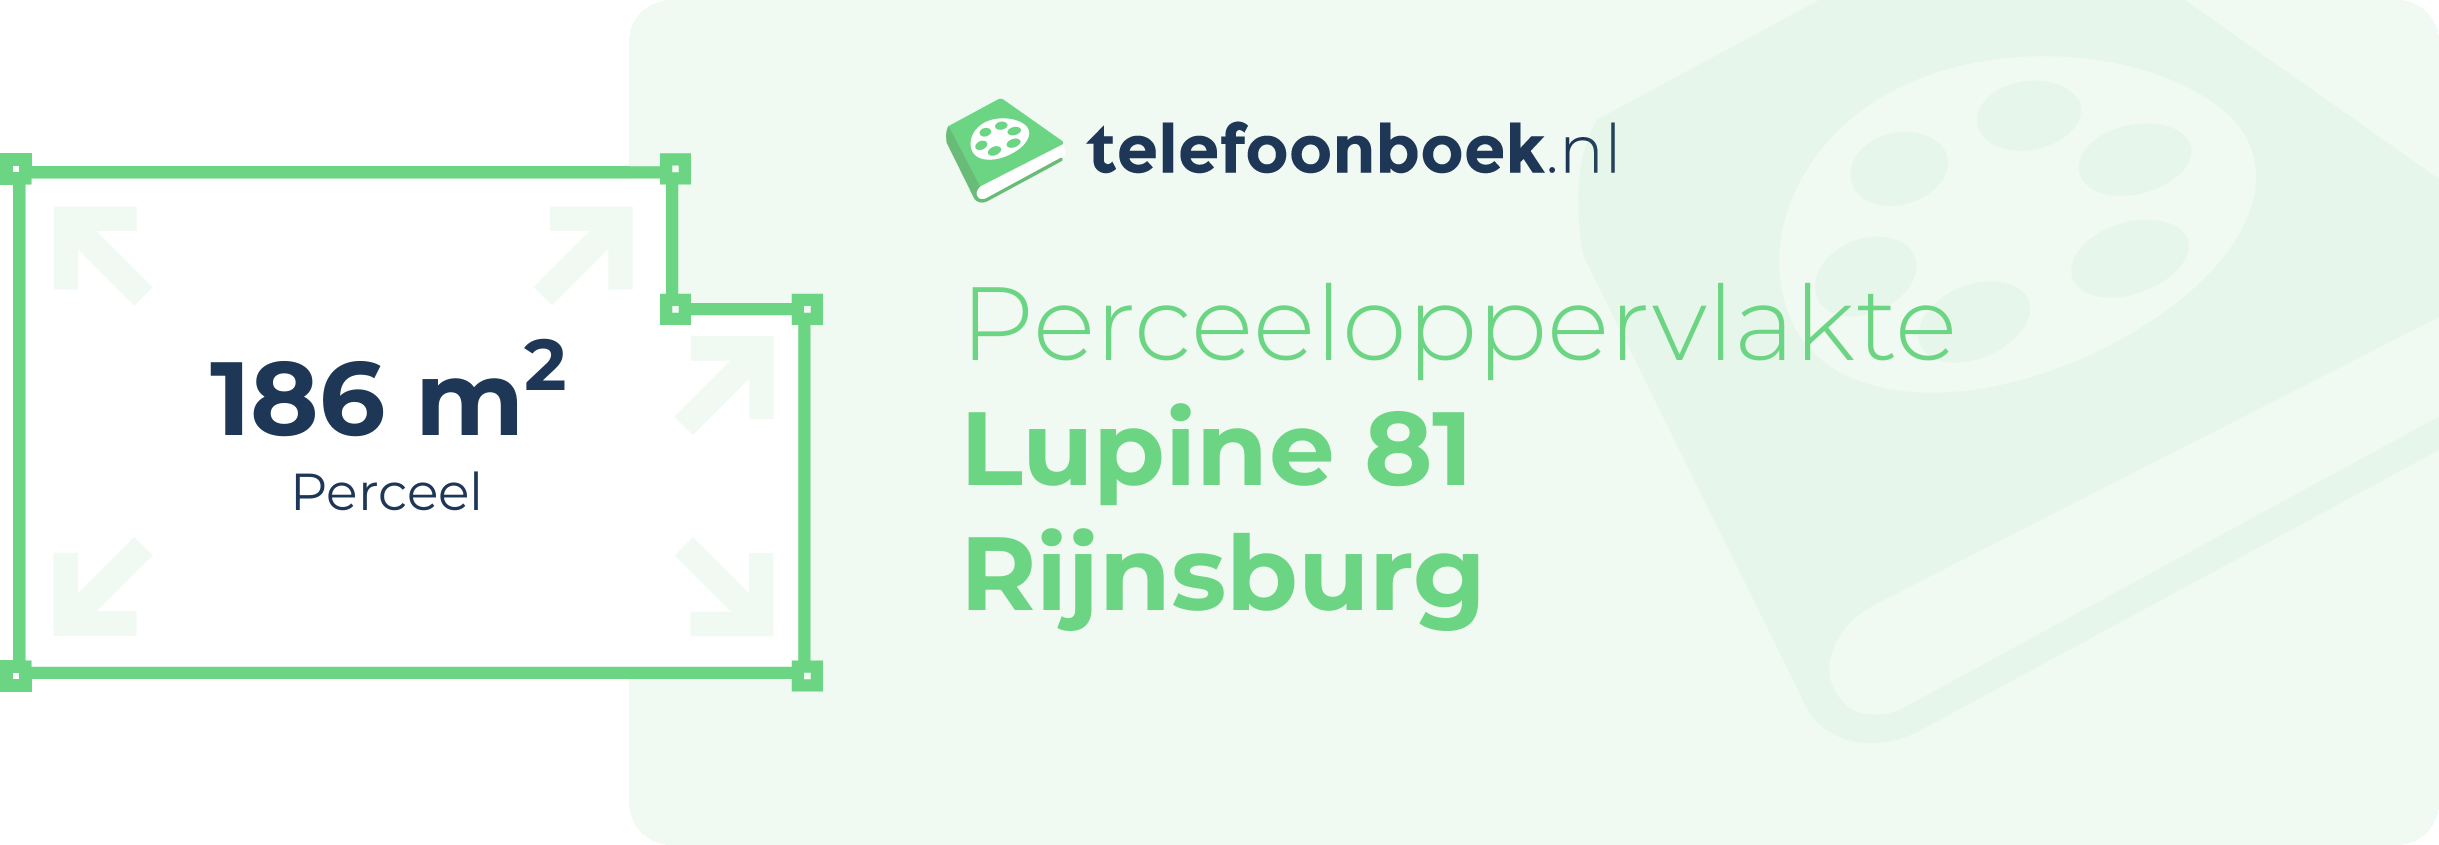 Perceeloppervlakte Lupine 81 Rijnsburg